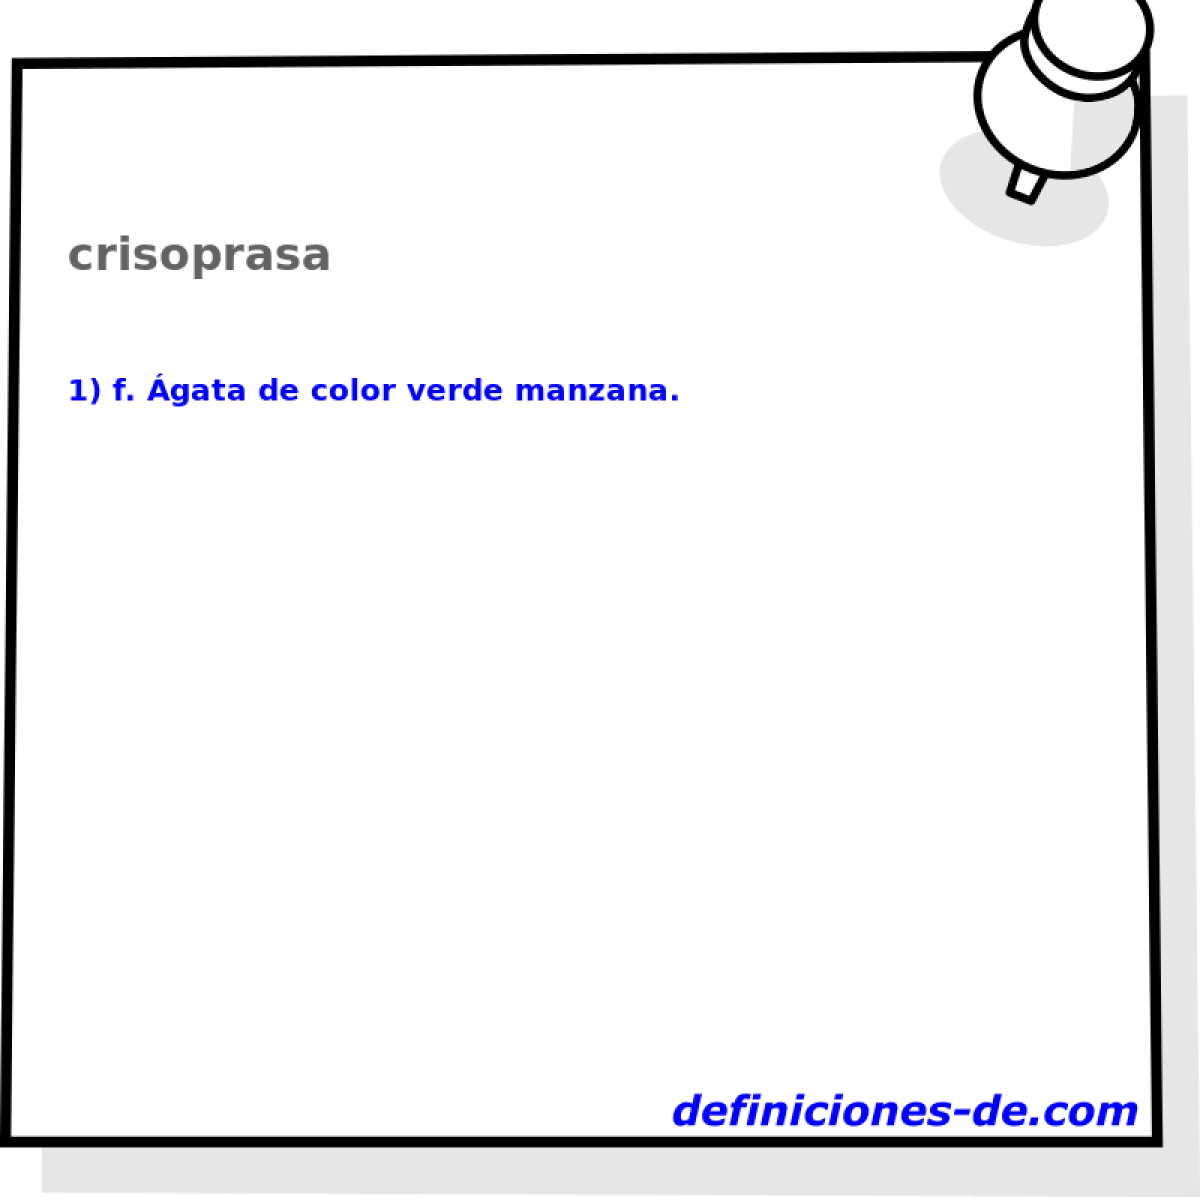 crisoprasa 